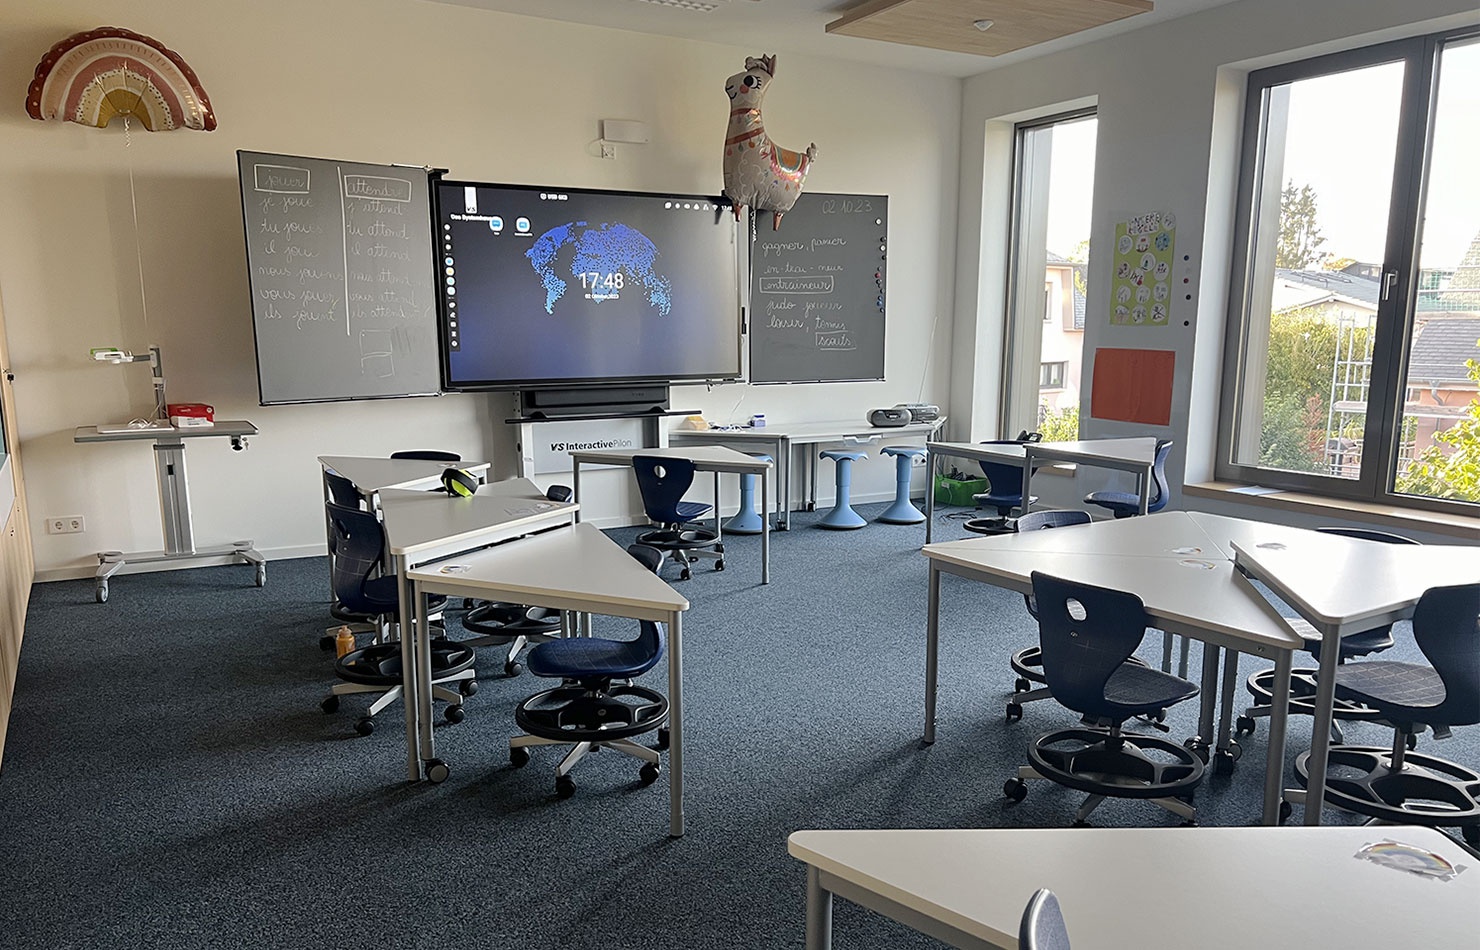 Salle de classe avec tableau interactif